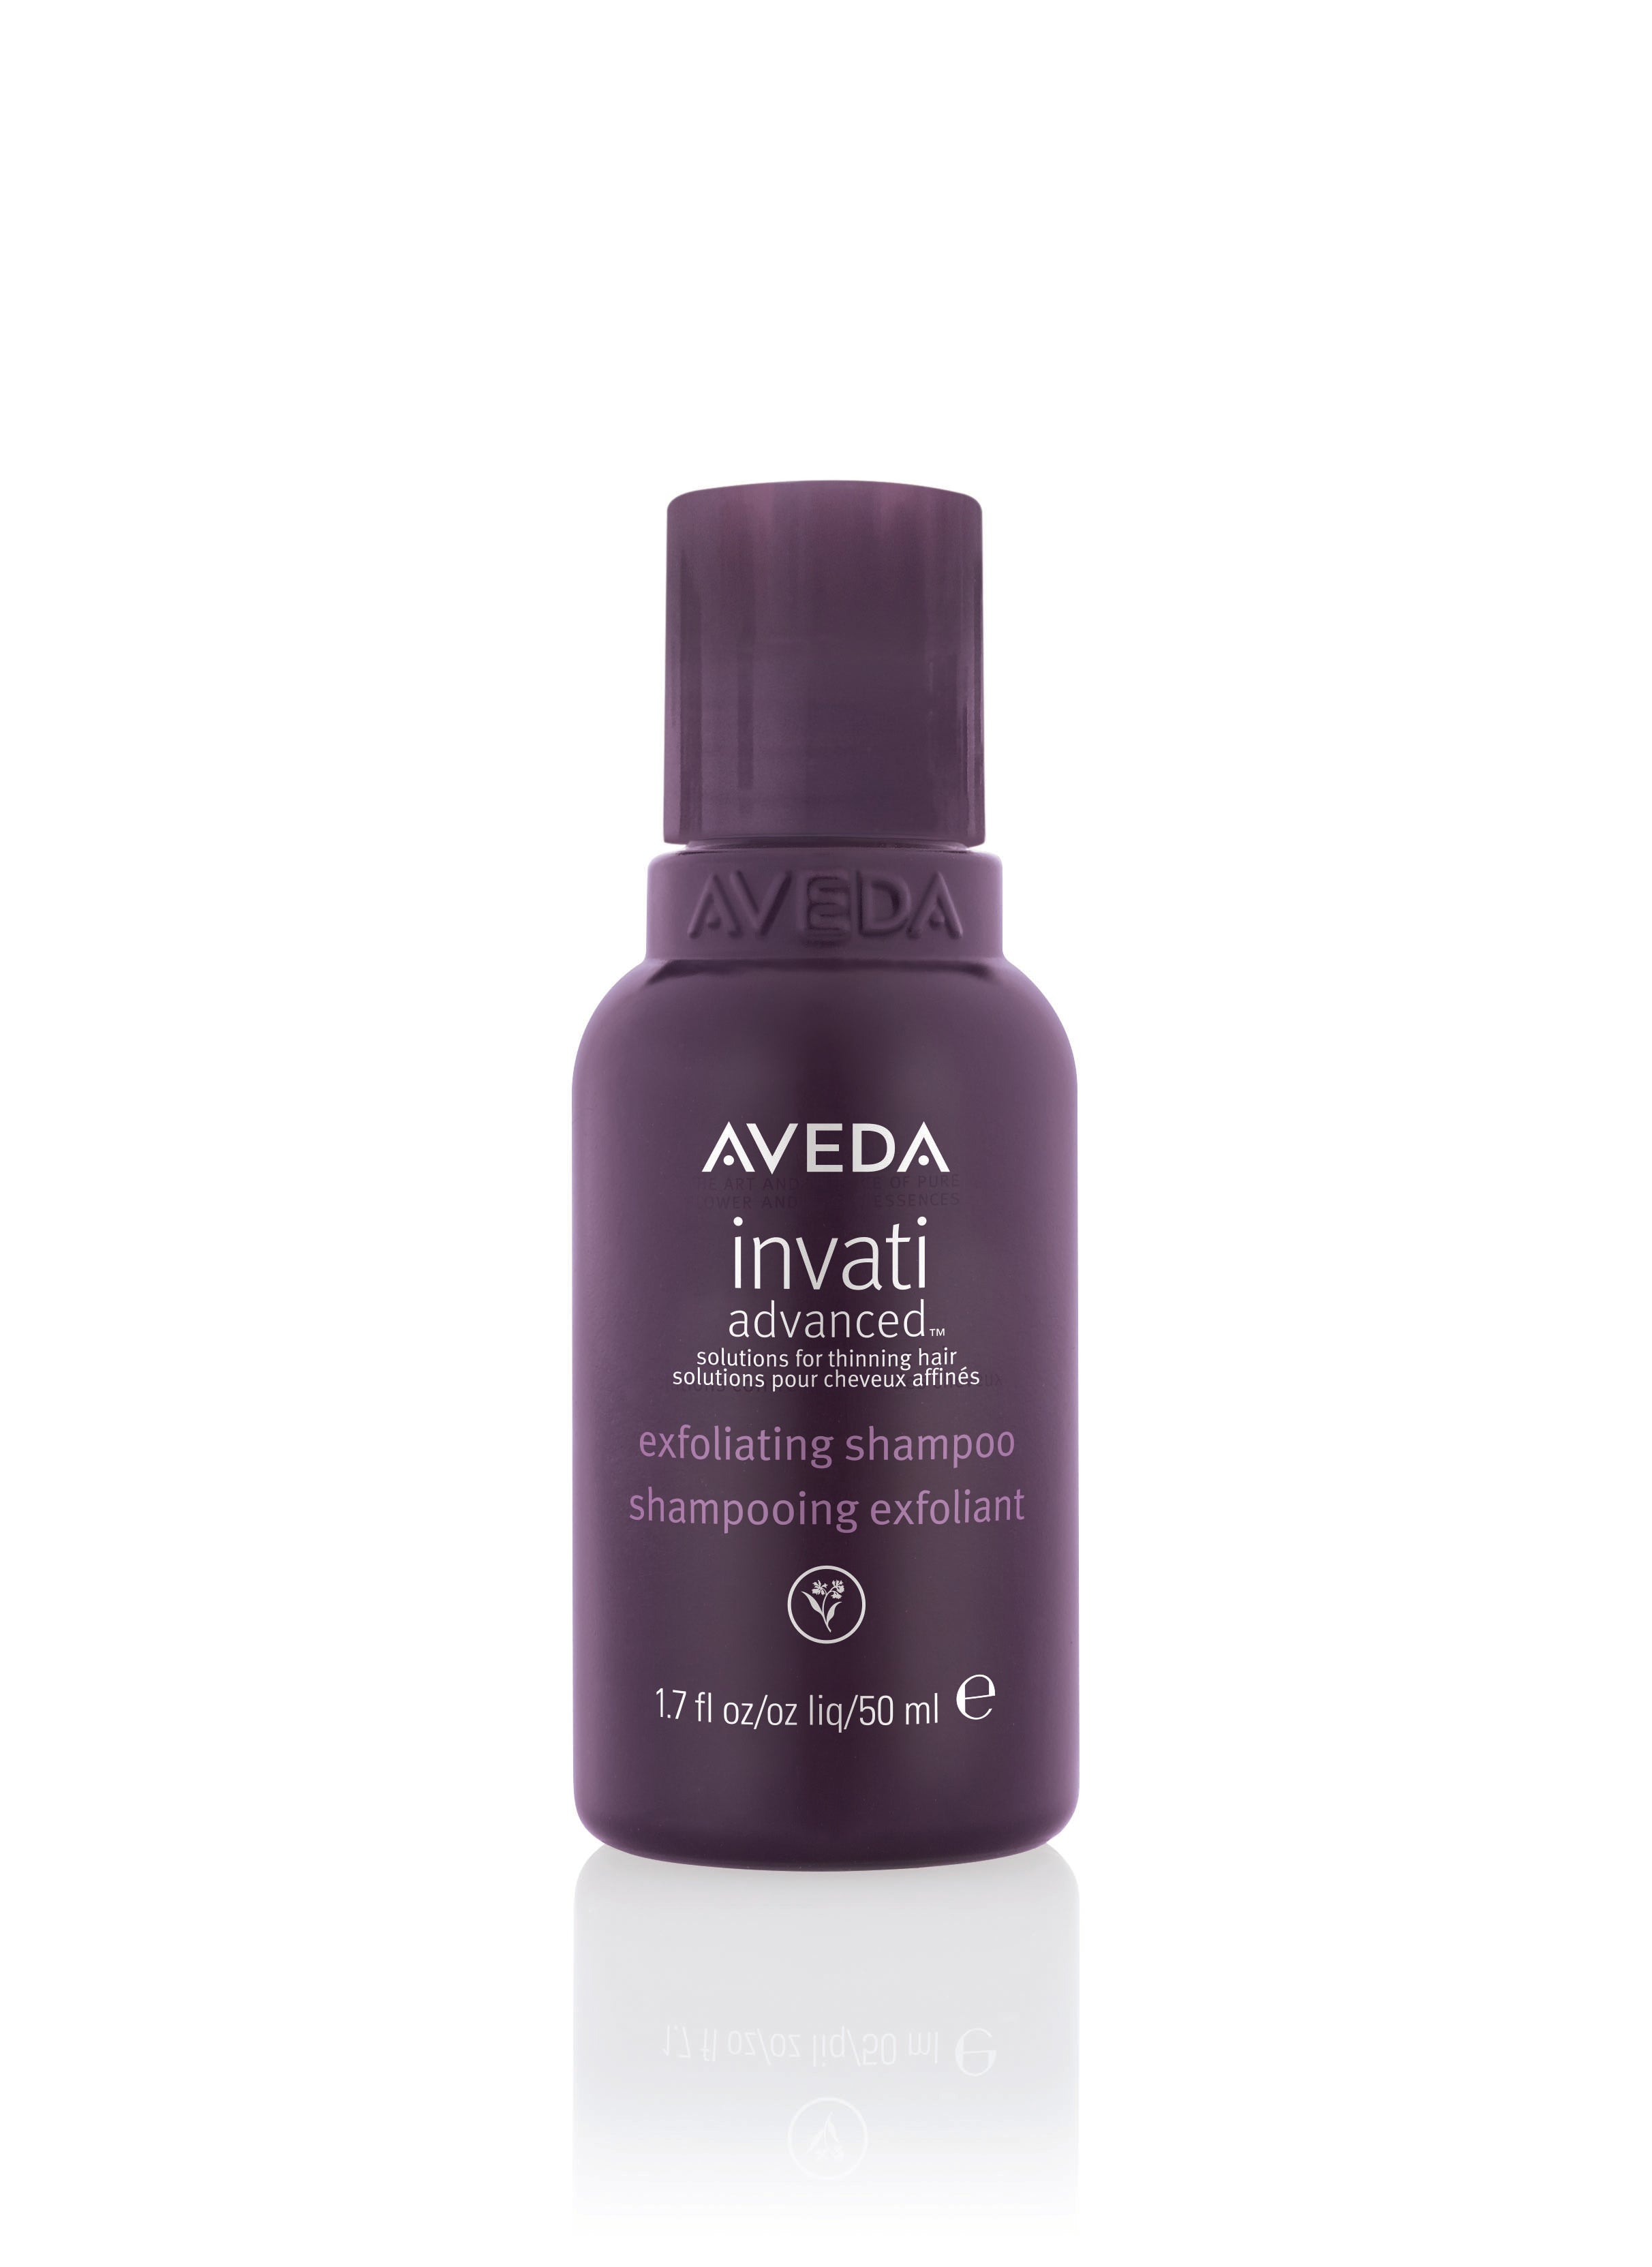 Aveda invati exfoliating shampoo - travel size